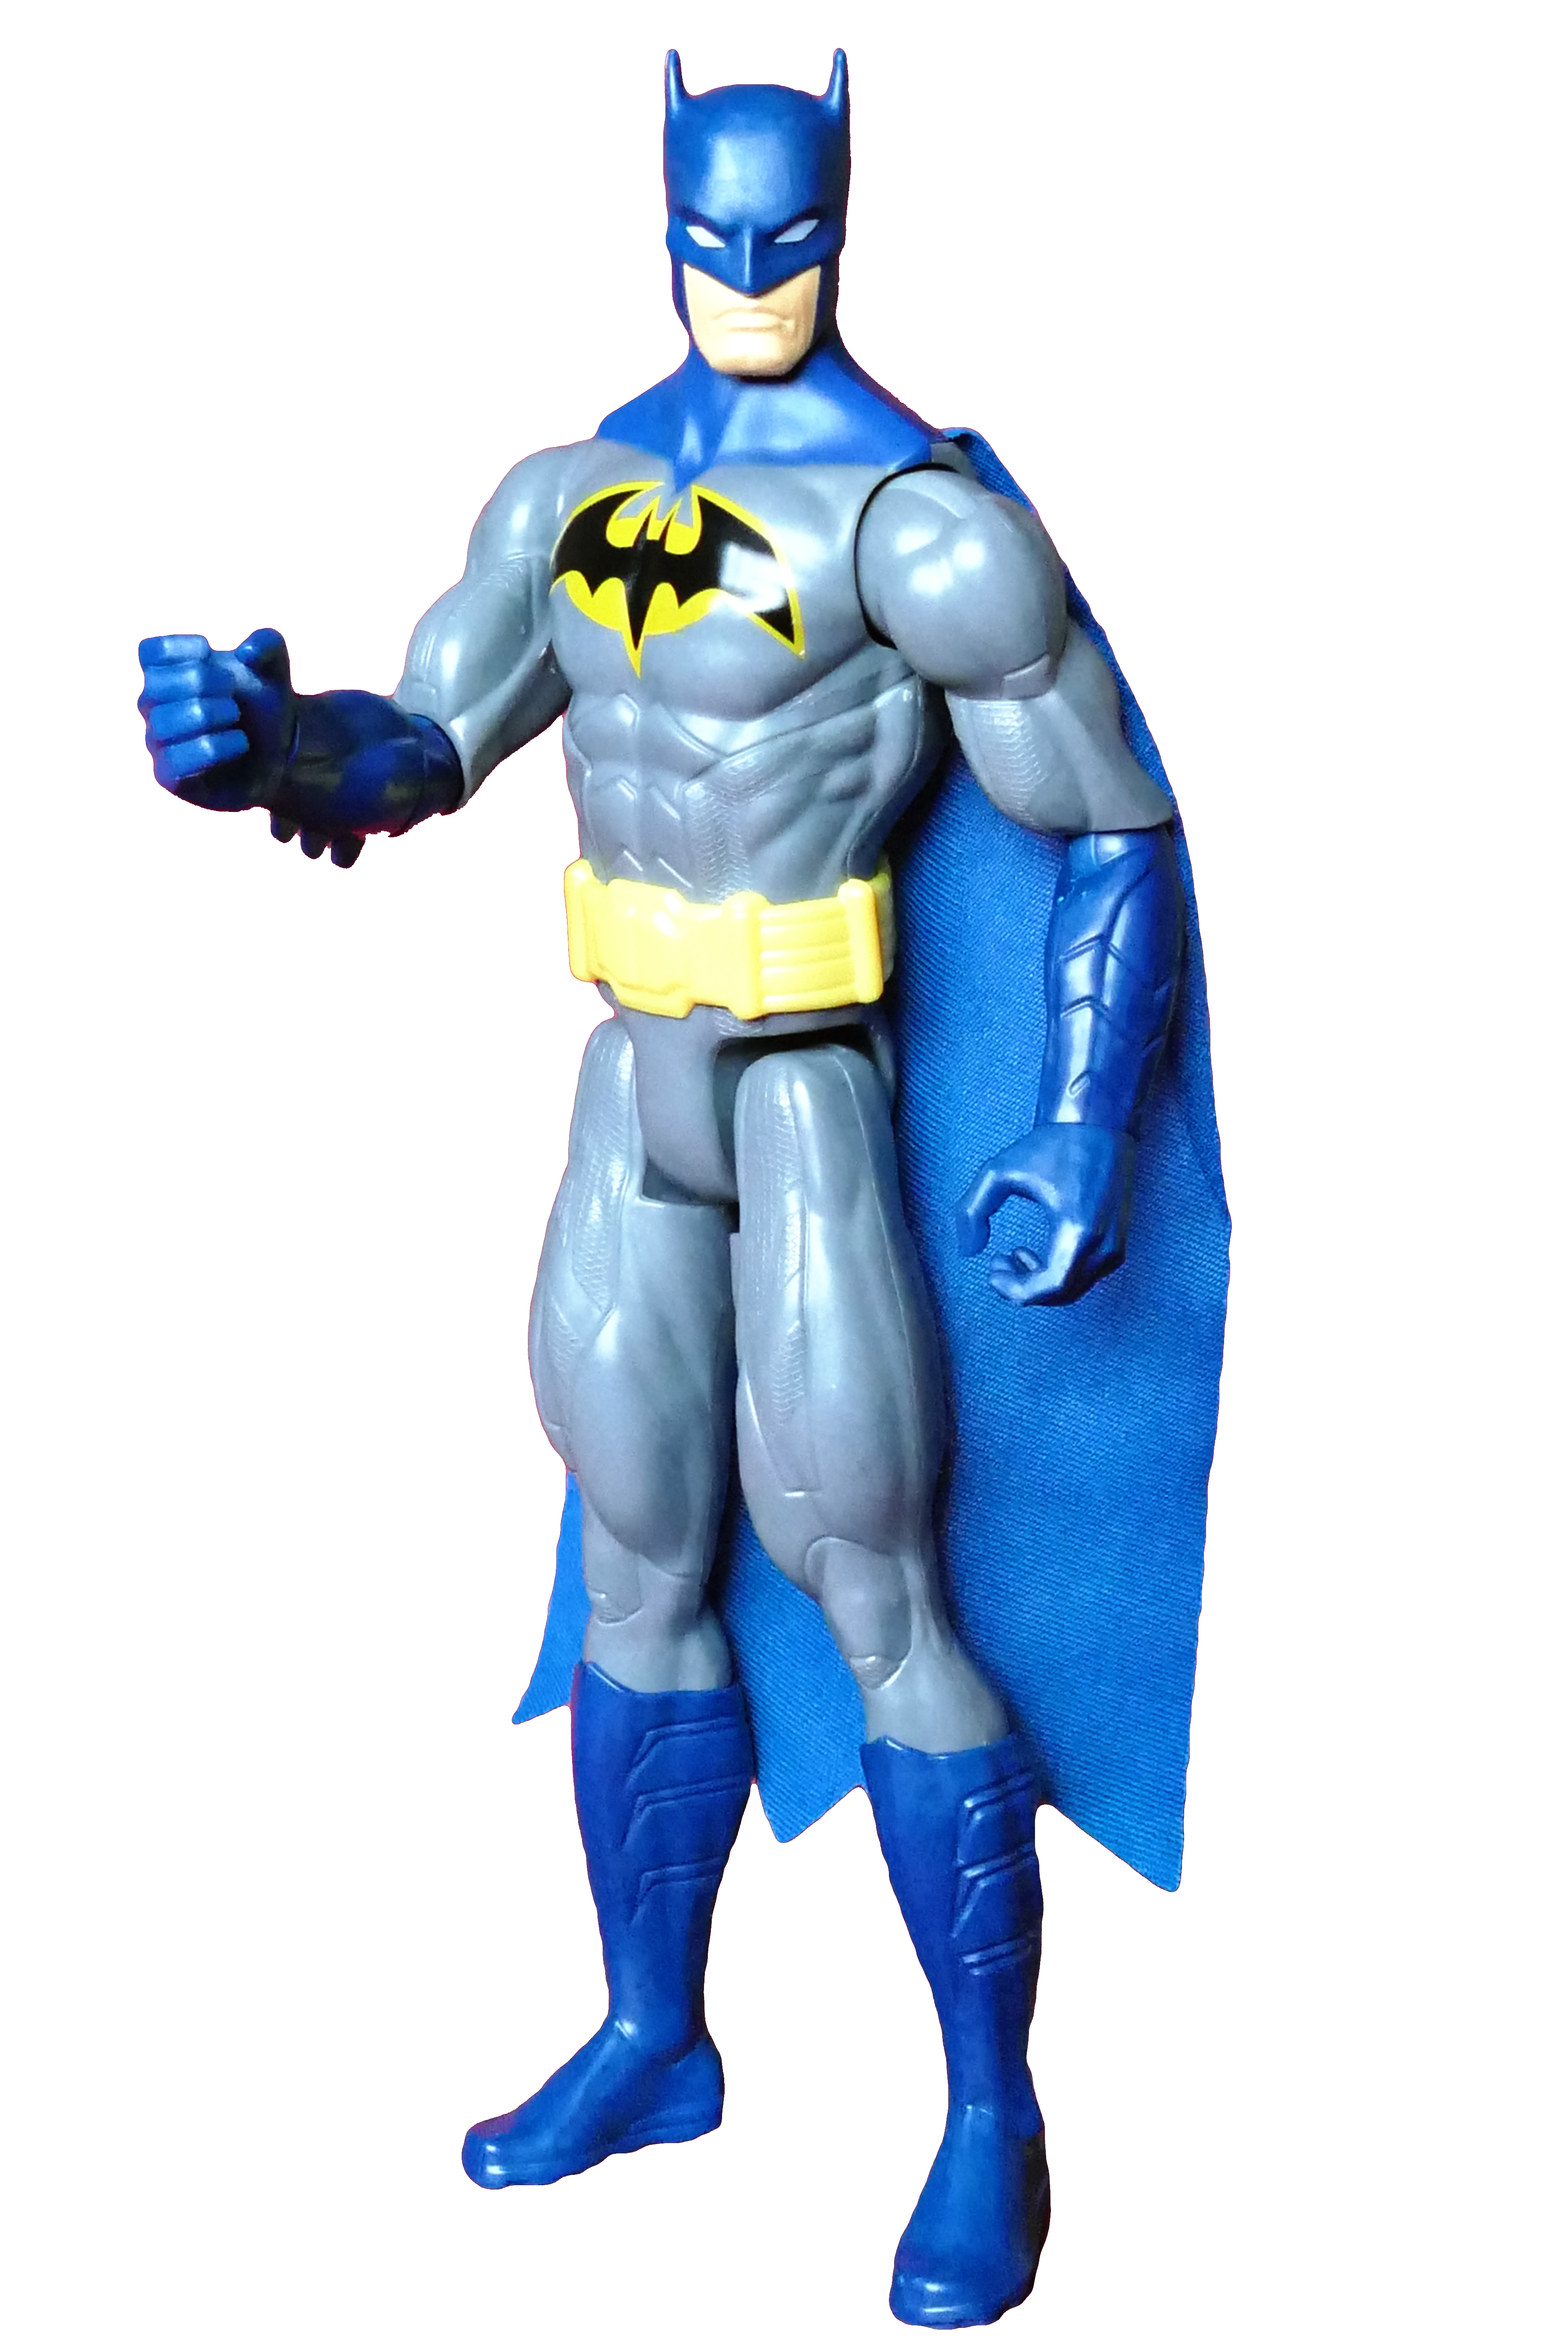 Batman Toy PNG Image - PurePNG | Free transparent CC0 PNG Image Library